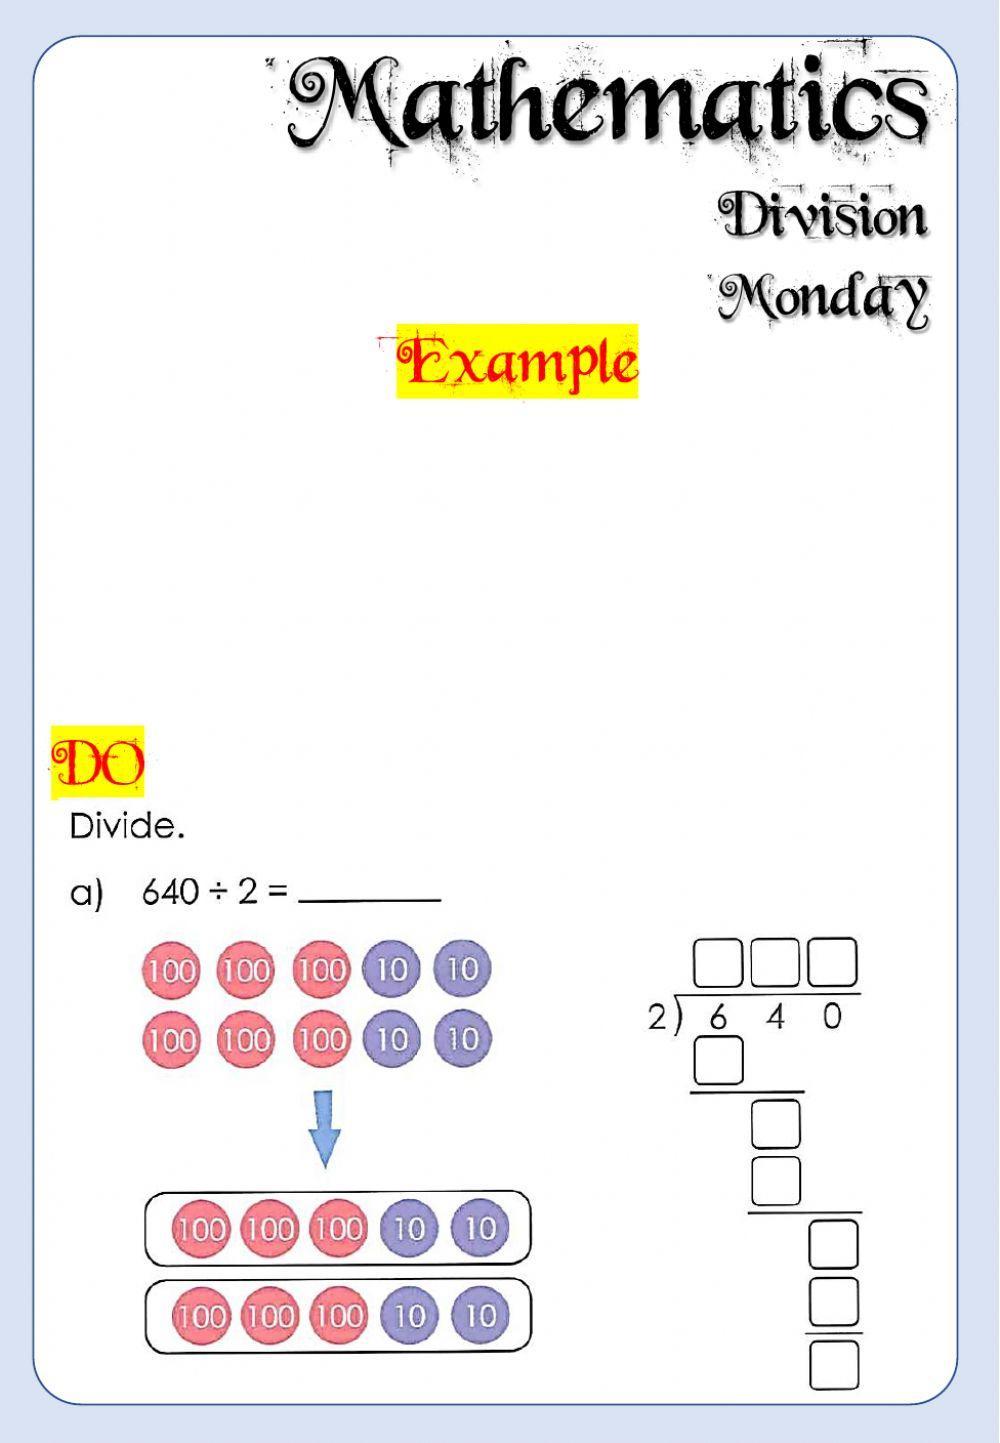 Week 25 - Monday - Math - Division